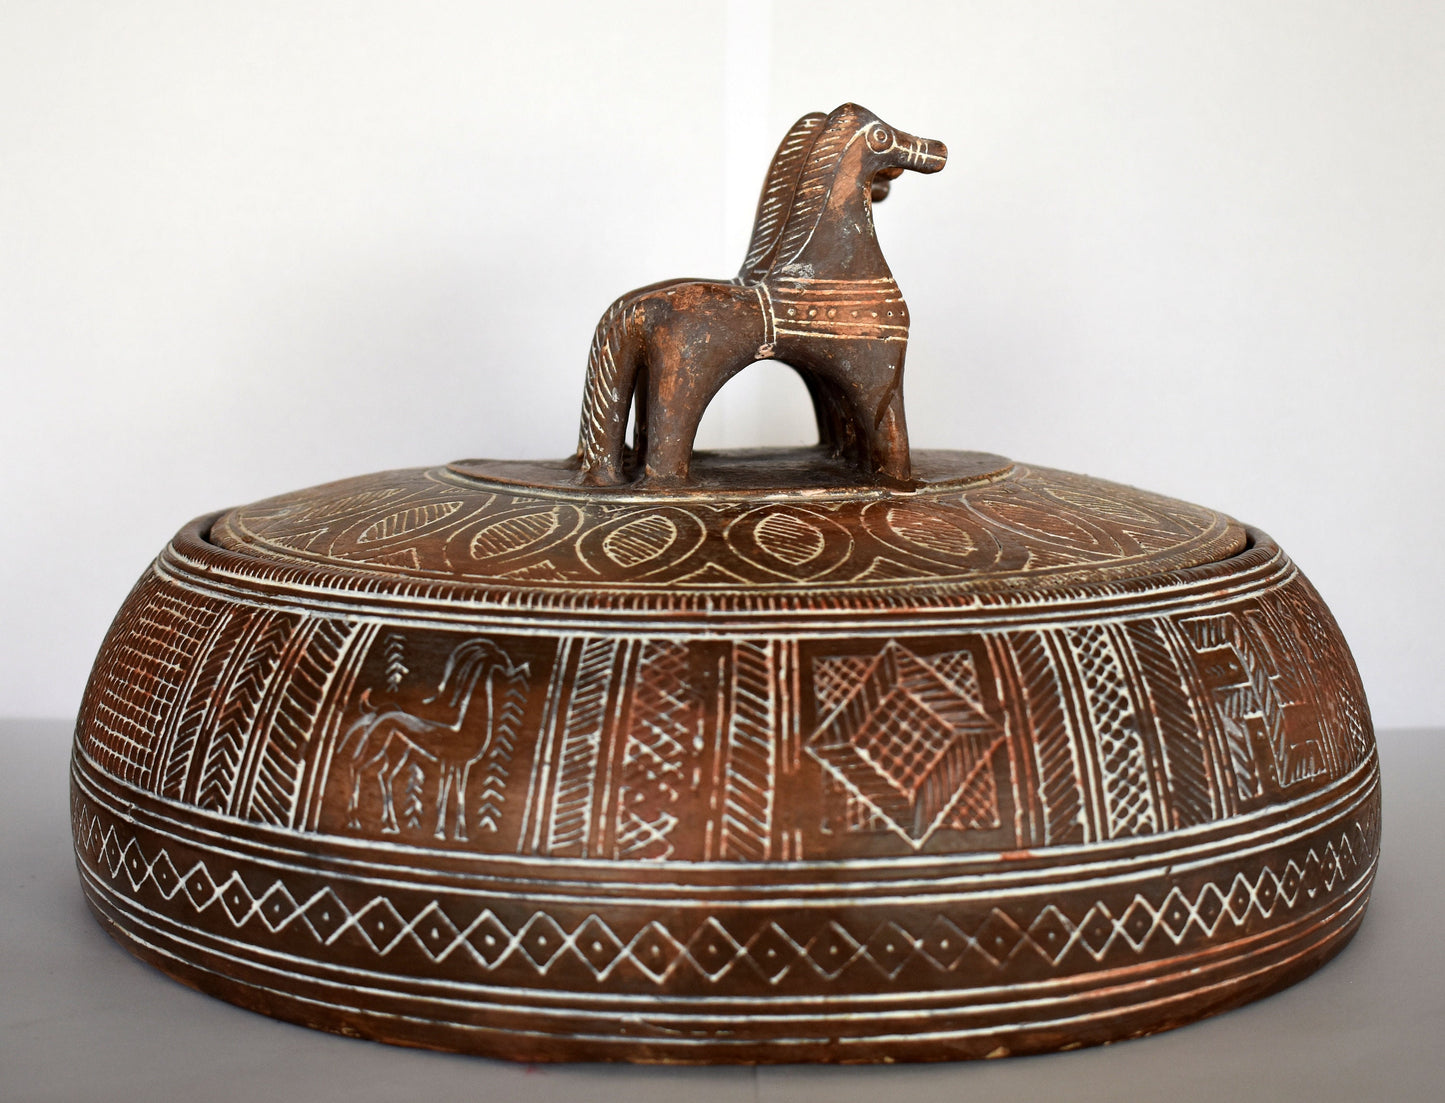 Pyxis Geometric Vase -  Cylindrical Box - Four Horses - Athens, Attica - Geometric, 800 BC -  Museum Reproduction - Ceramic Artifact